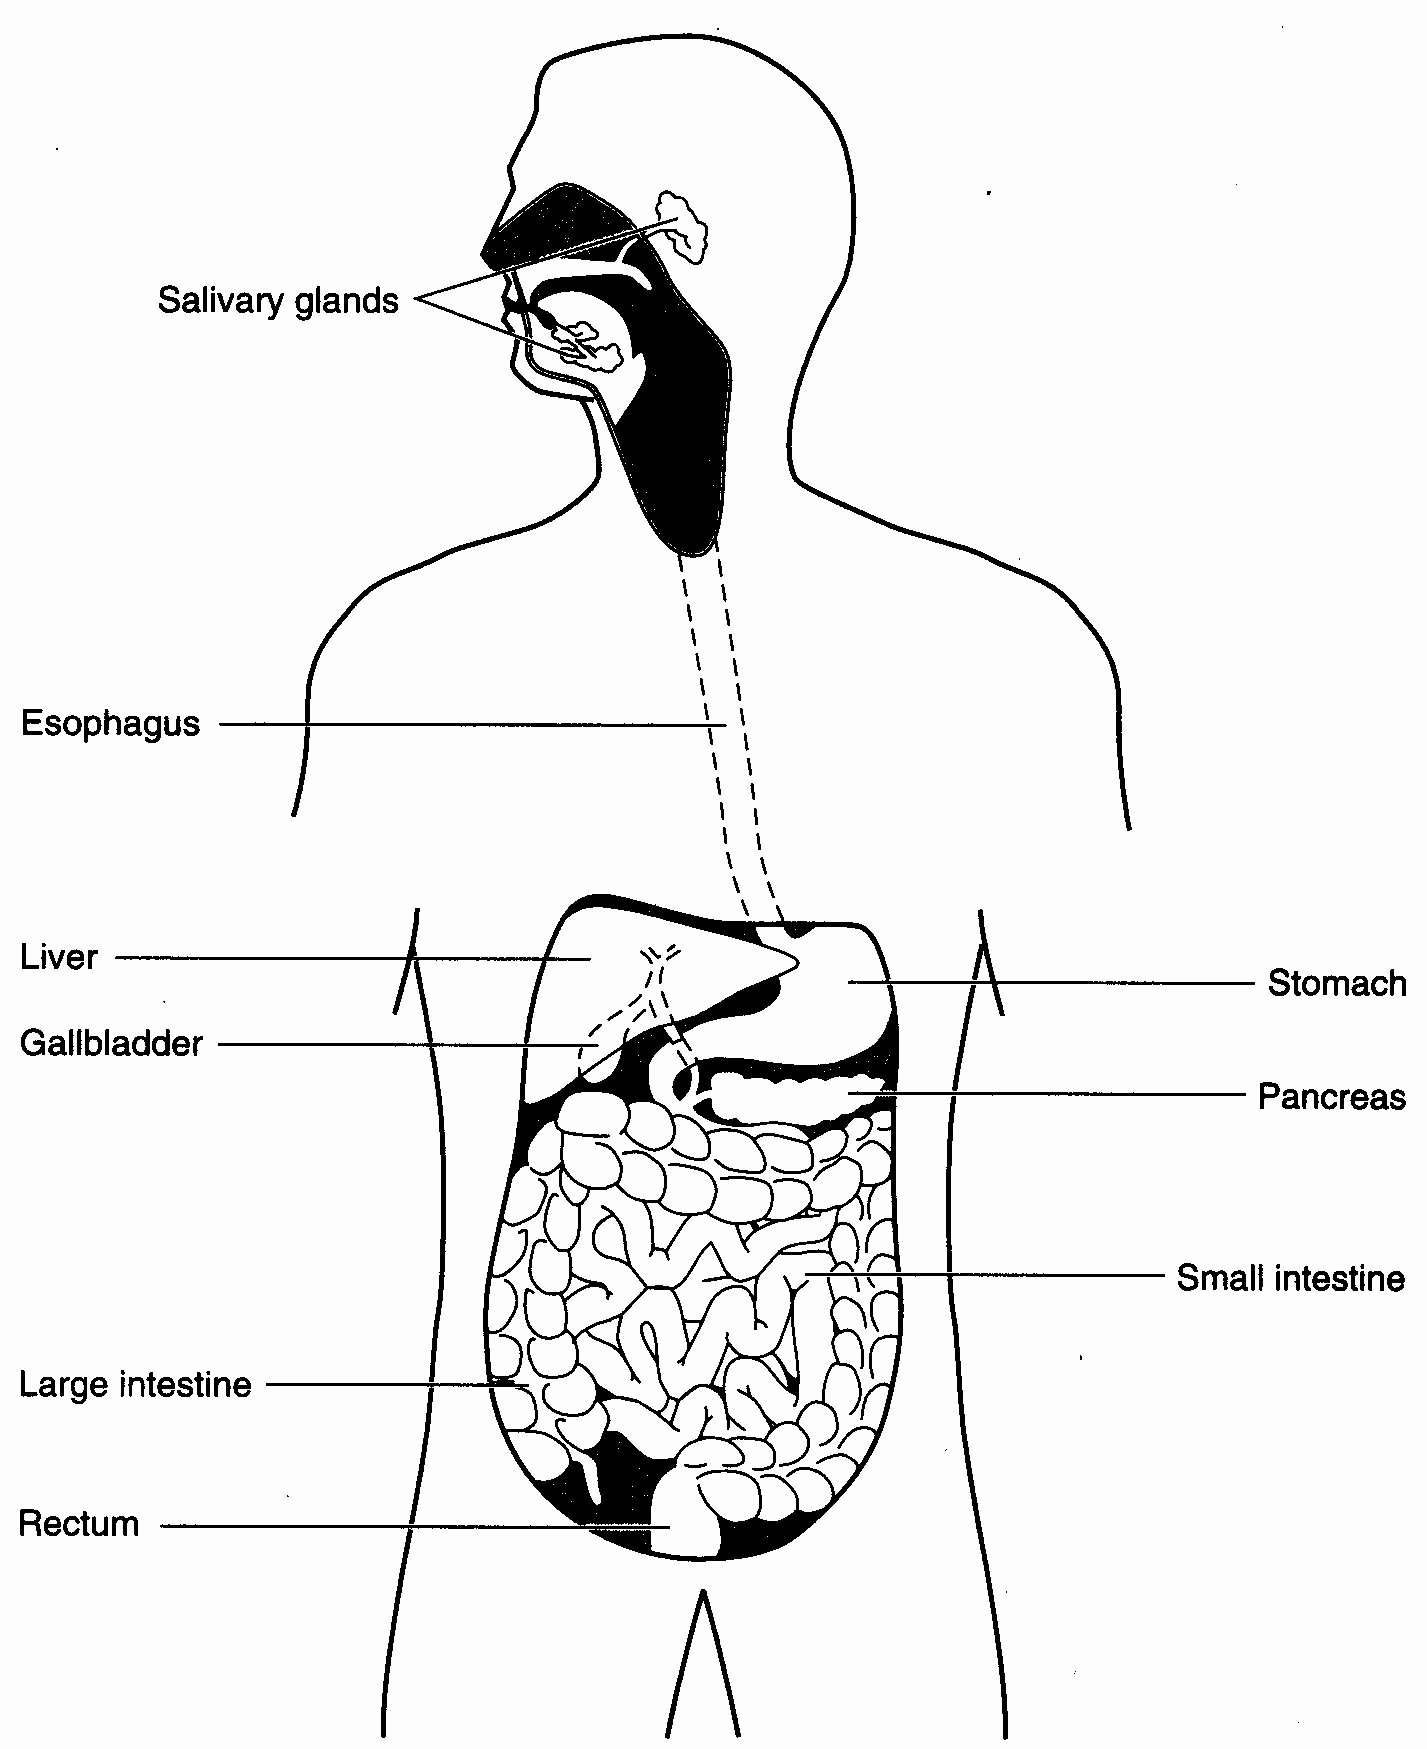 Human Digestive System Worksheet Luxury Human Body Science Digestive System Worksheet